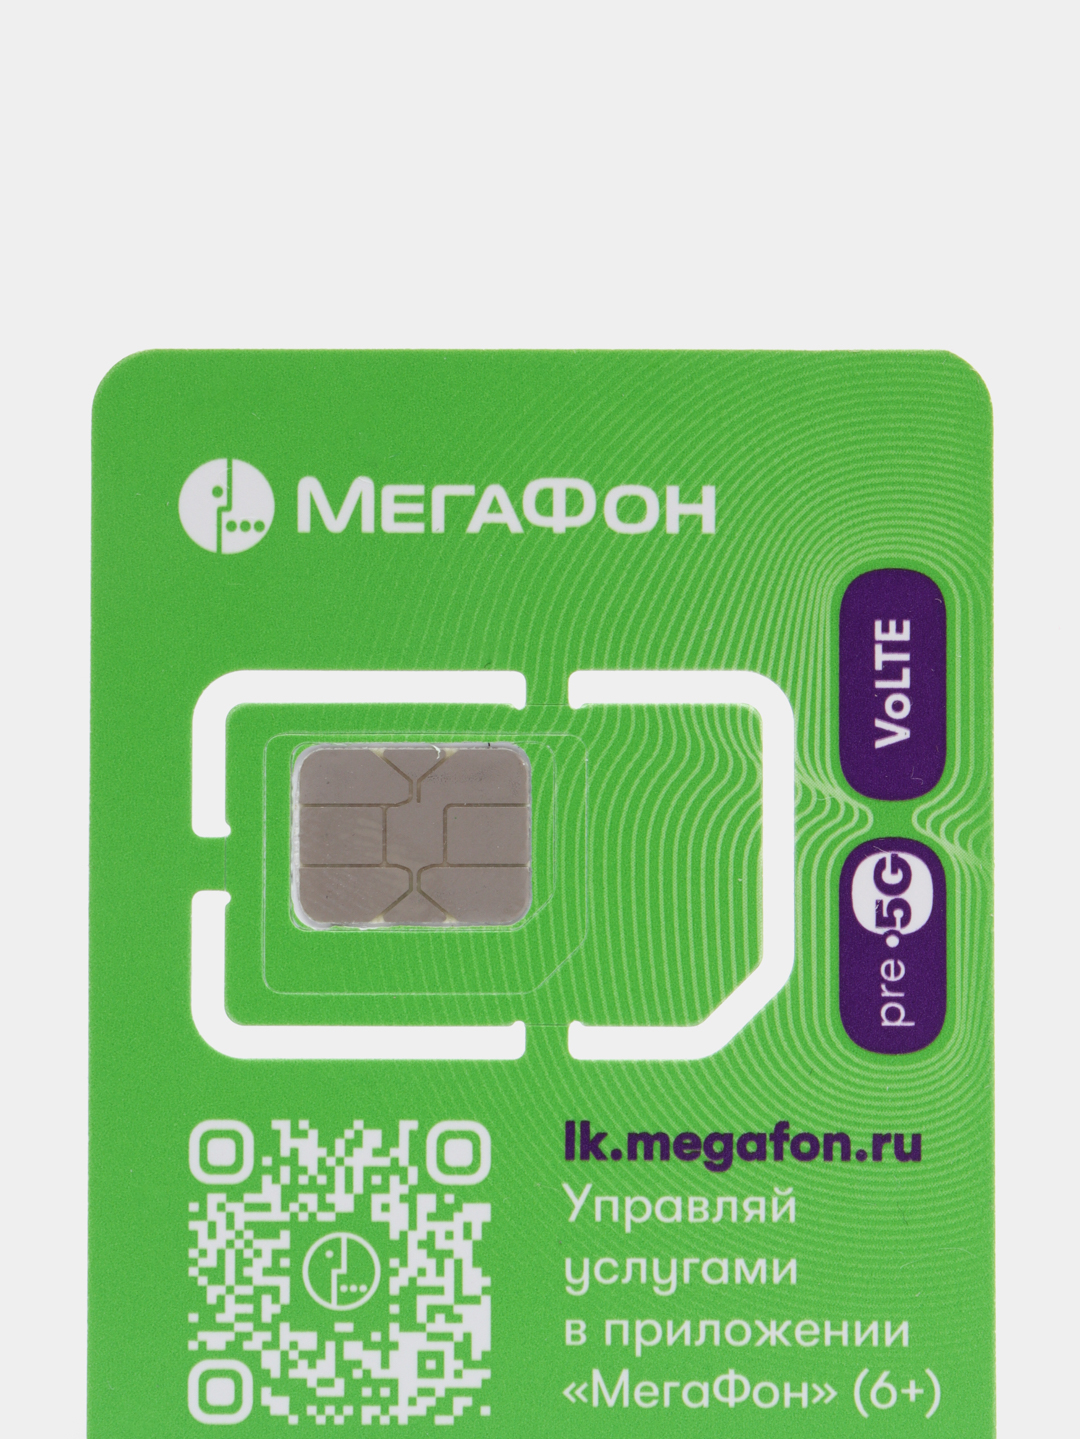 SIM-карта МегаФон для Республики Татарстан 450 р/мес.,80 гб, 900 мин,300  смс купить по цене 149 ₽ в интернет-магазине KazanExpress